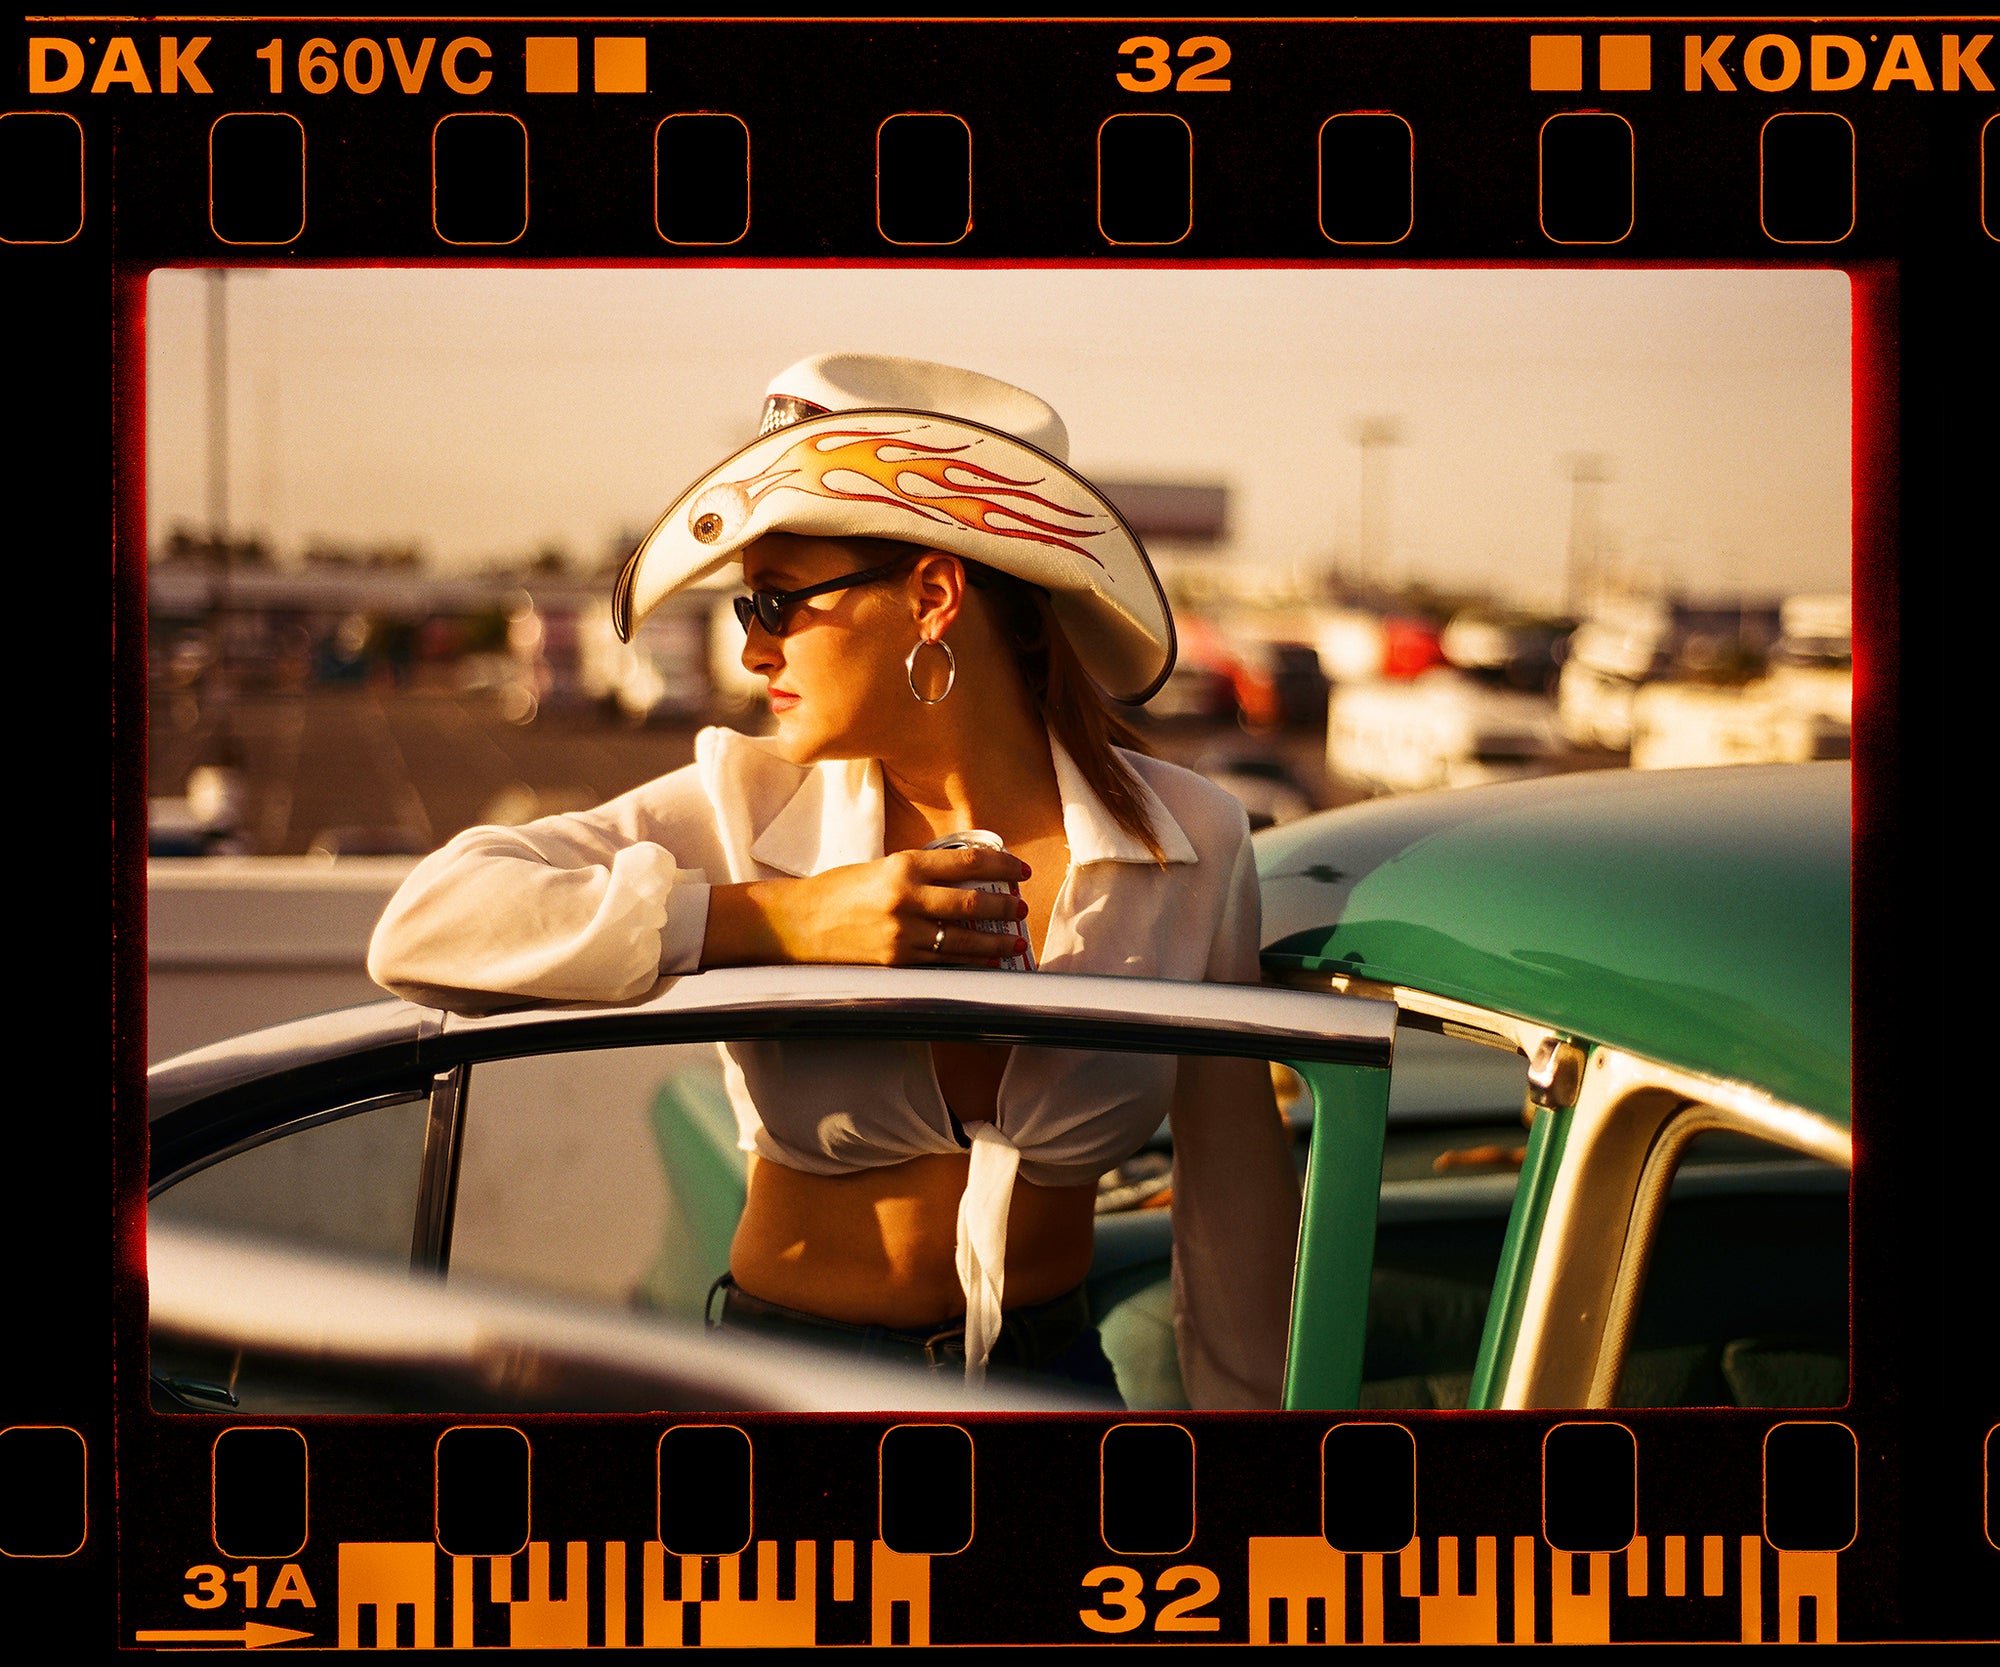 On the Road ~ Sunkissed Wendy, Las Vegas, 2001